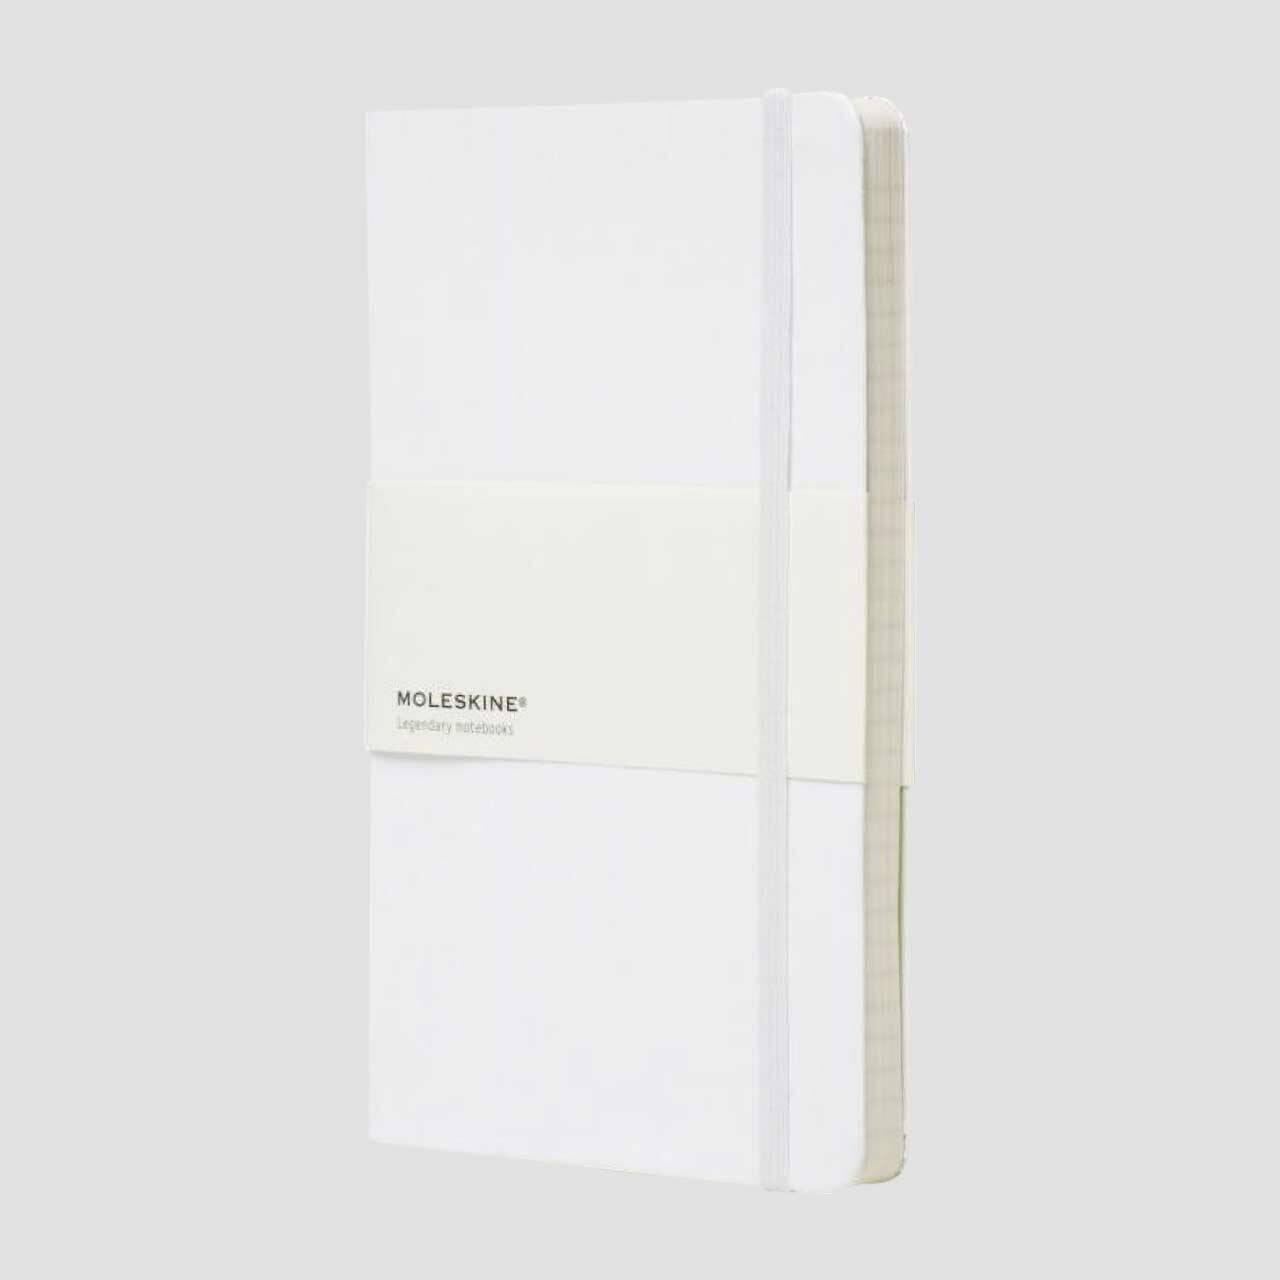 Moleskine notitieboek hard cover met banderol, wit